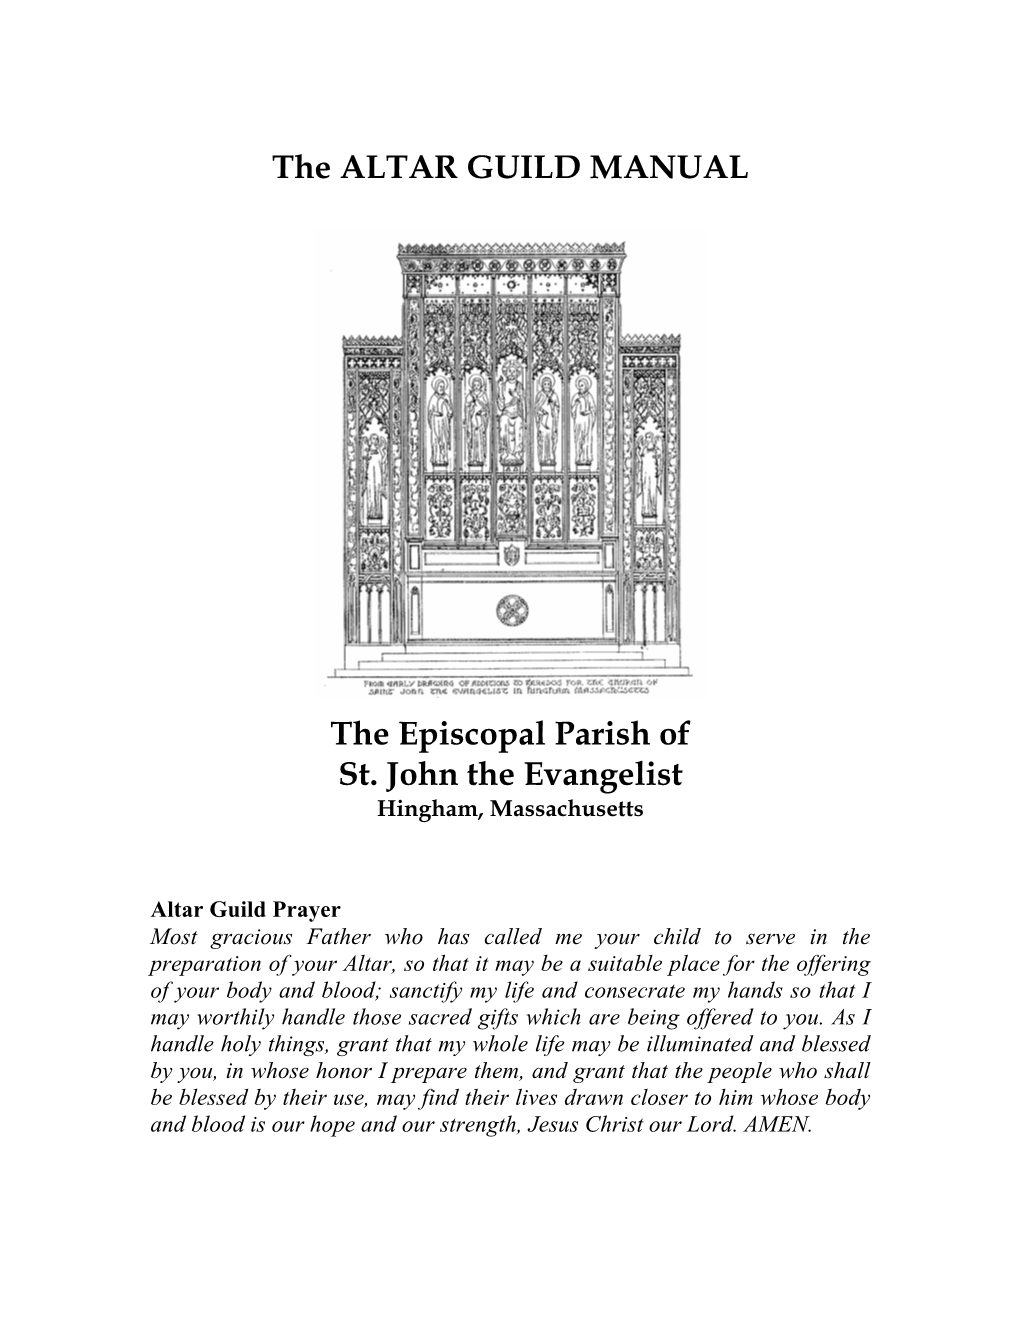 The ALTAR GUILD MANUAL the Episcopal Parish of St. John the Evangelist